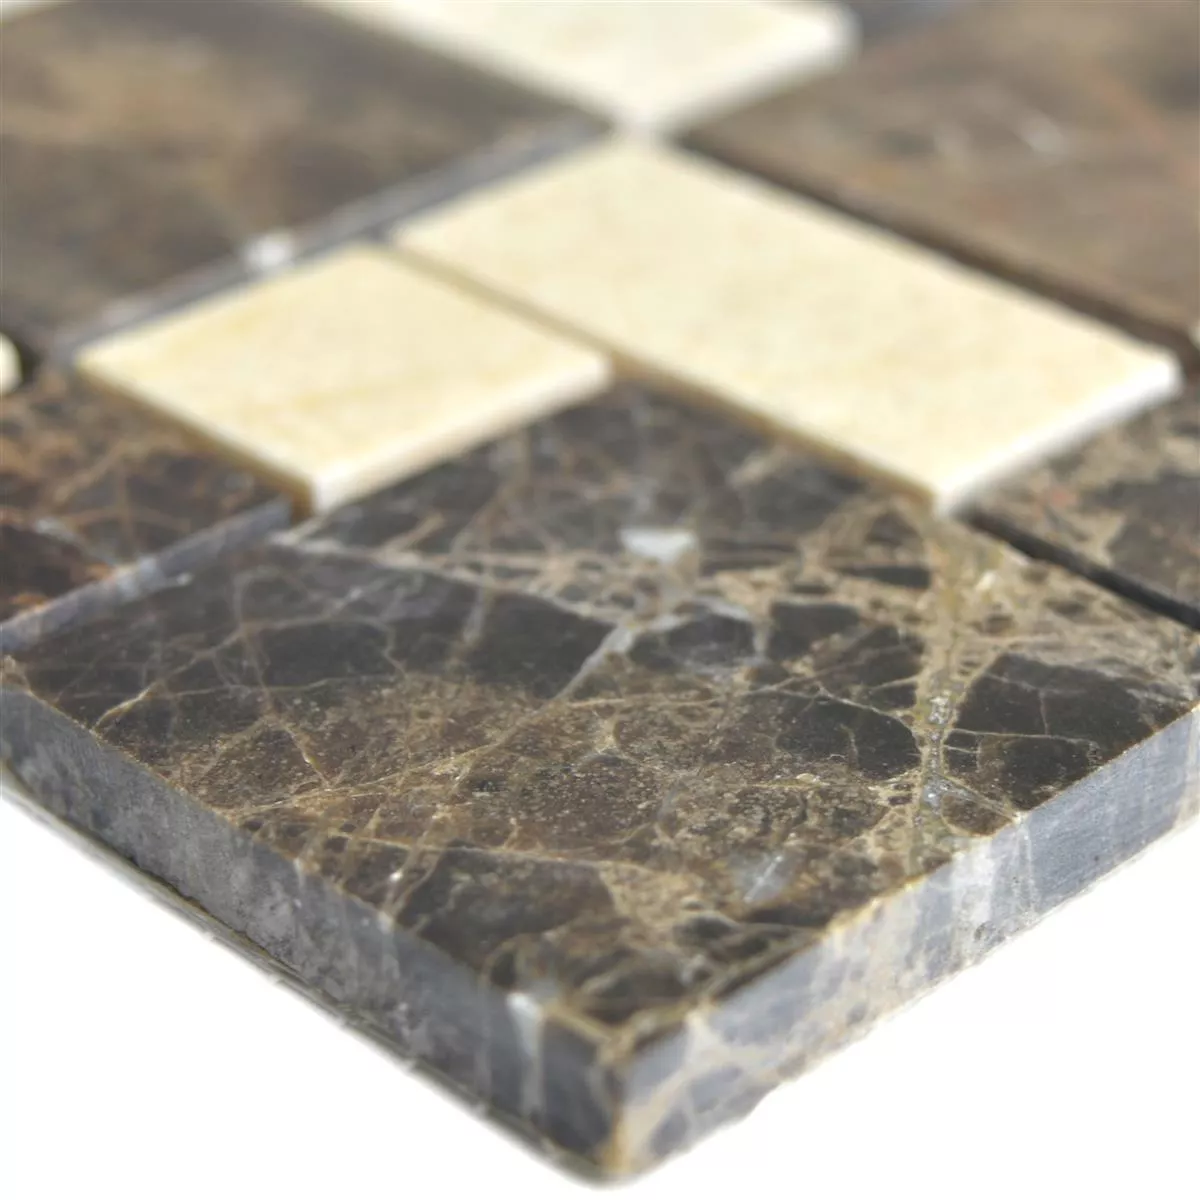 Marble Natural Stone Mosaic Tiles Cordoba Emprador Dark Beige